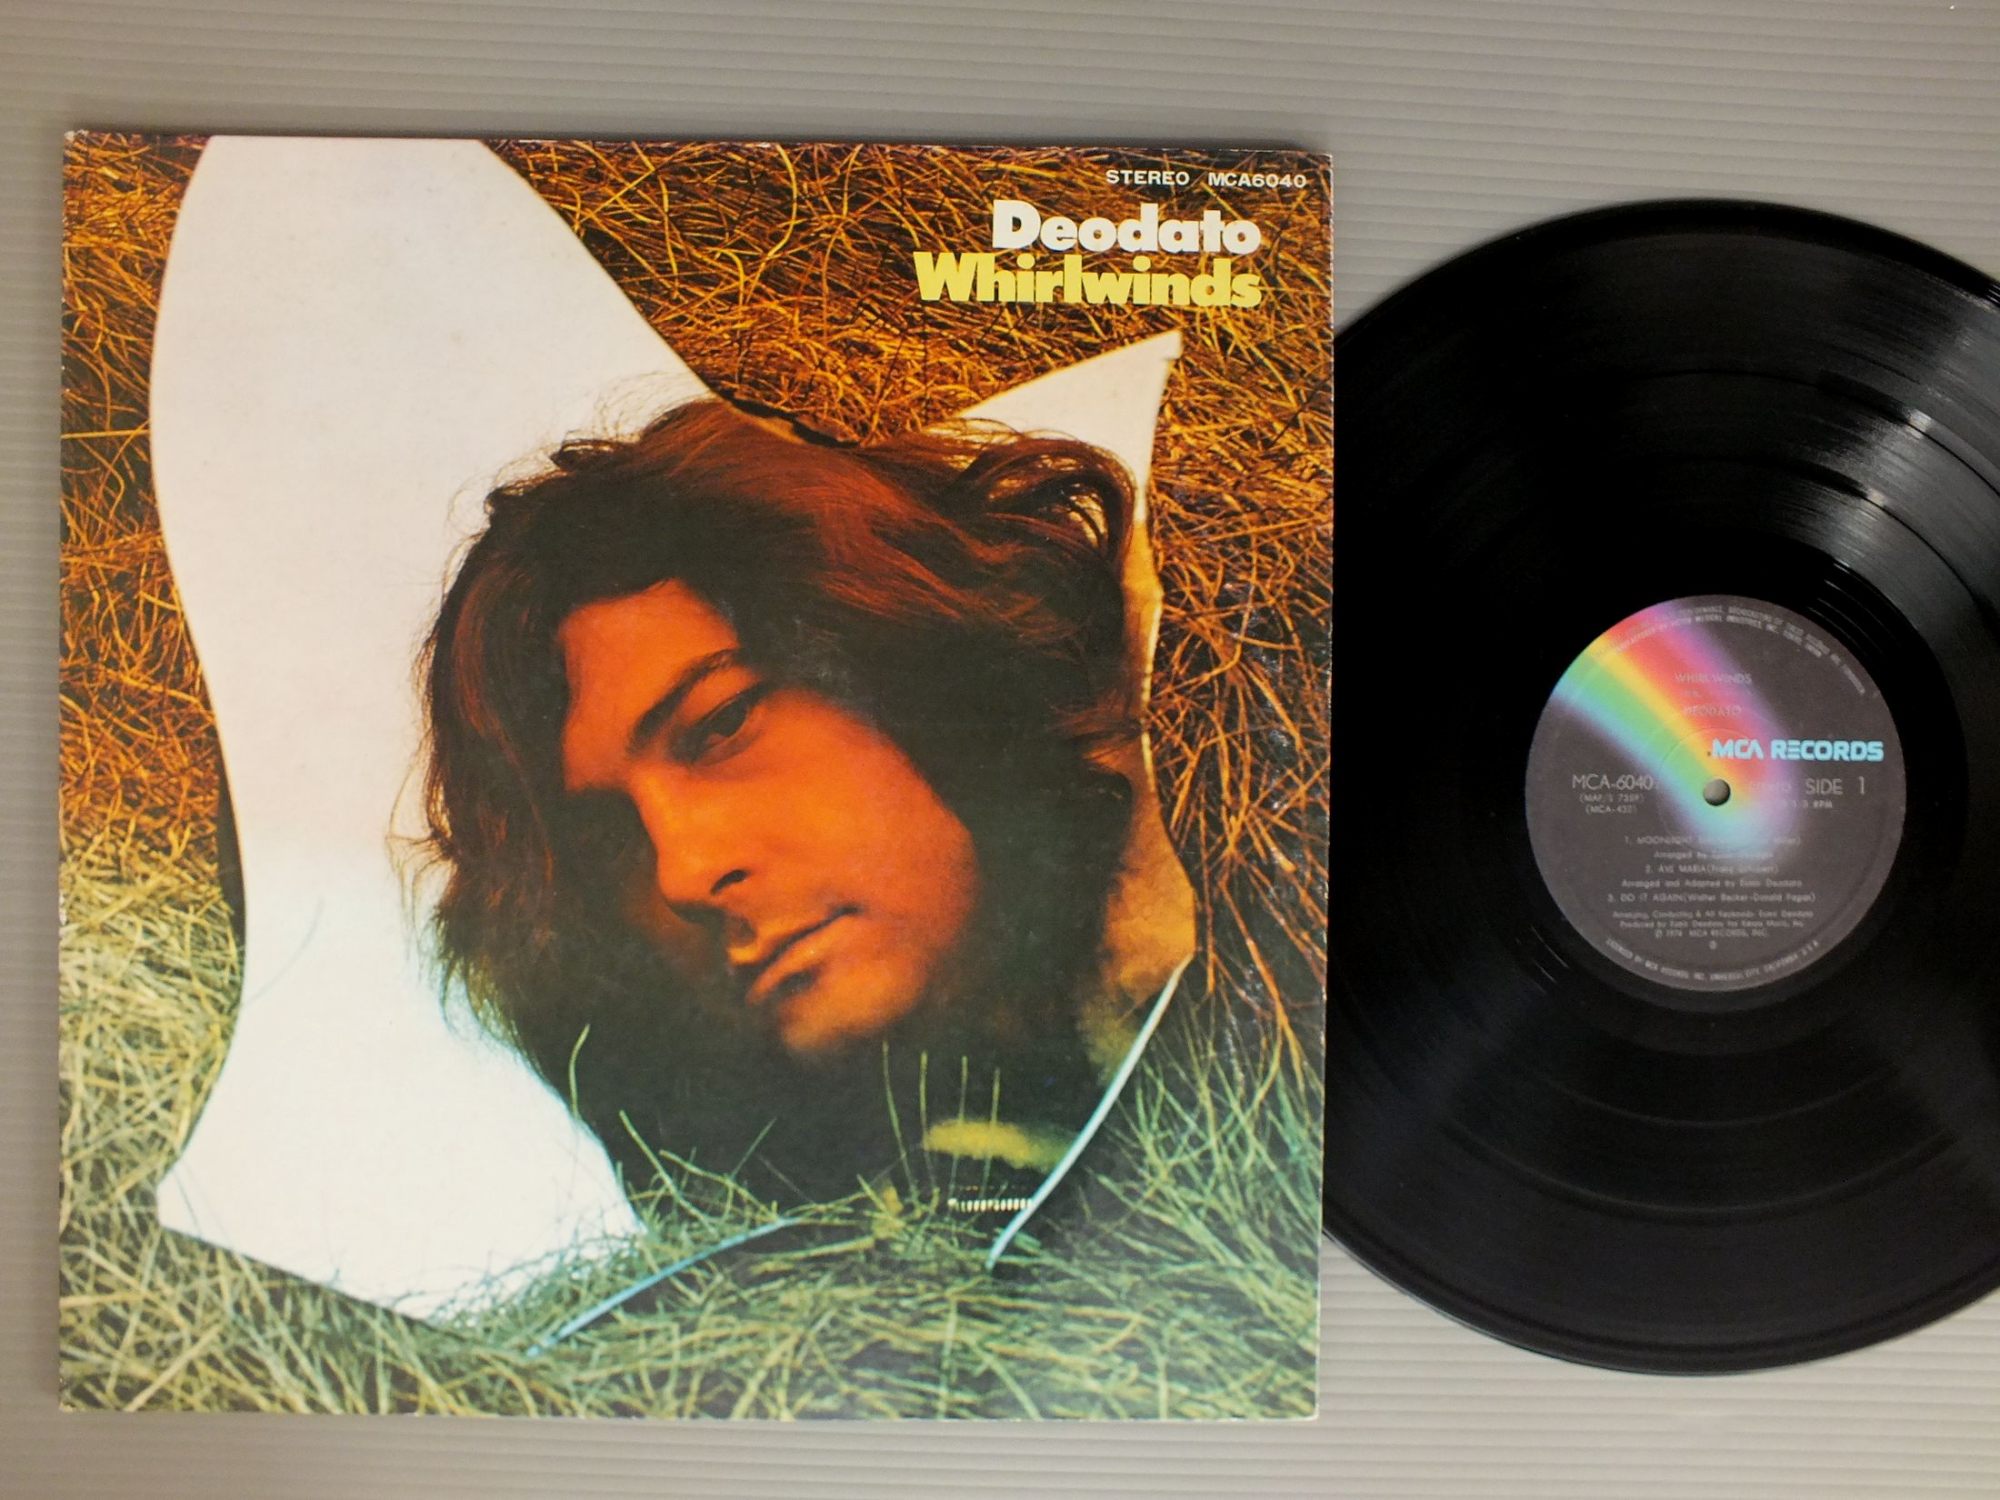 Deodato Whirlwinds (Vinyl Records, LP, CD) on CDandLP